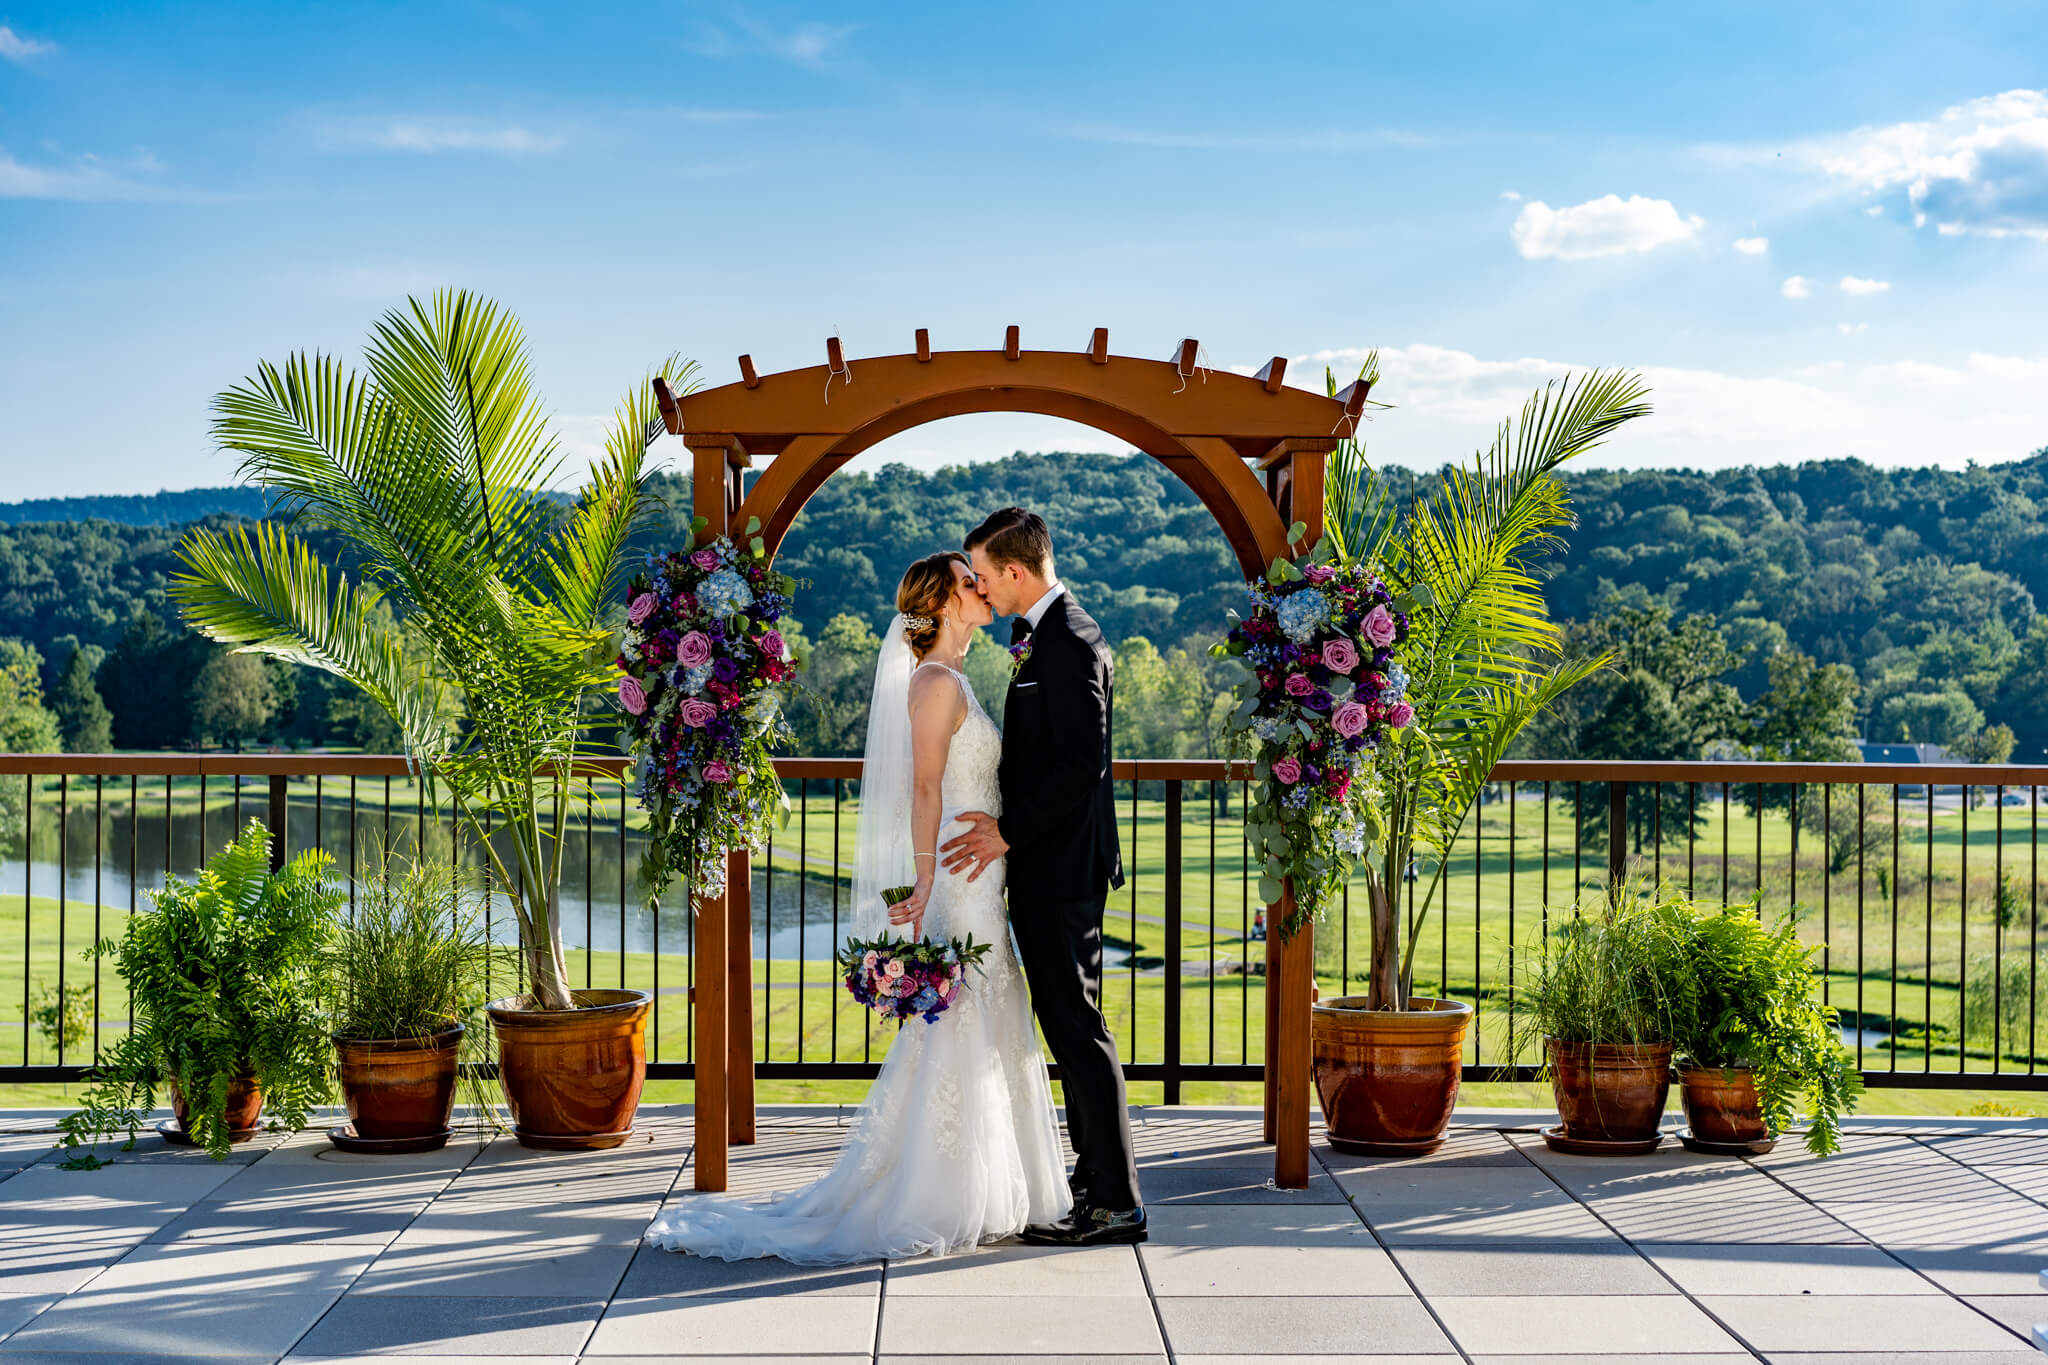 Rachel & Luke Liberty Mountain Resort Wedding Outdoor Ceremony Indoor Reception Jewish Non Traditional Wedding -031.jpg